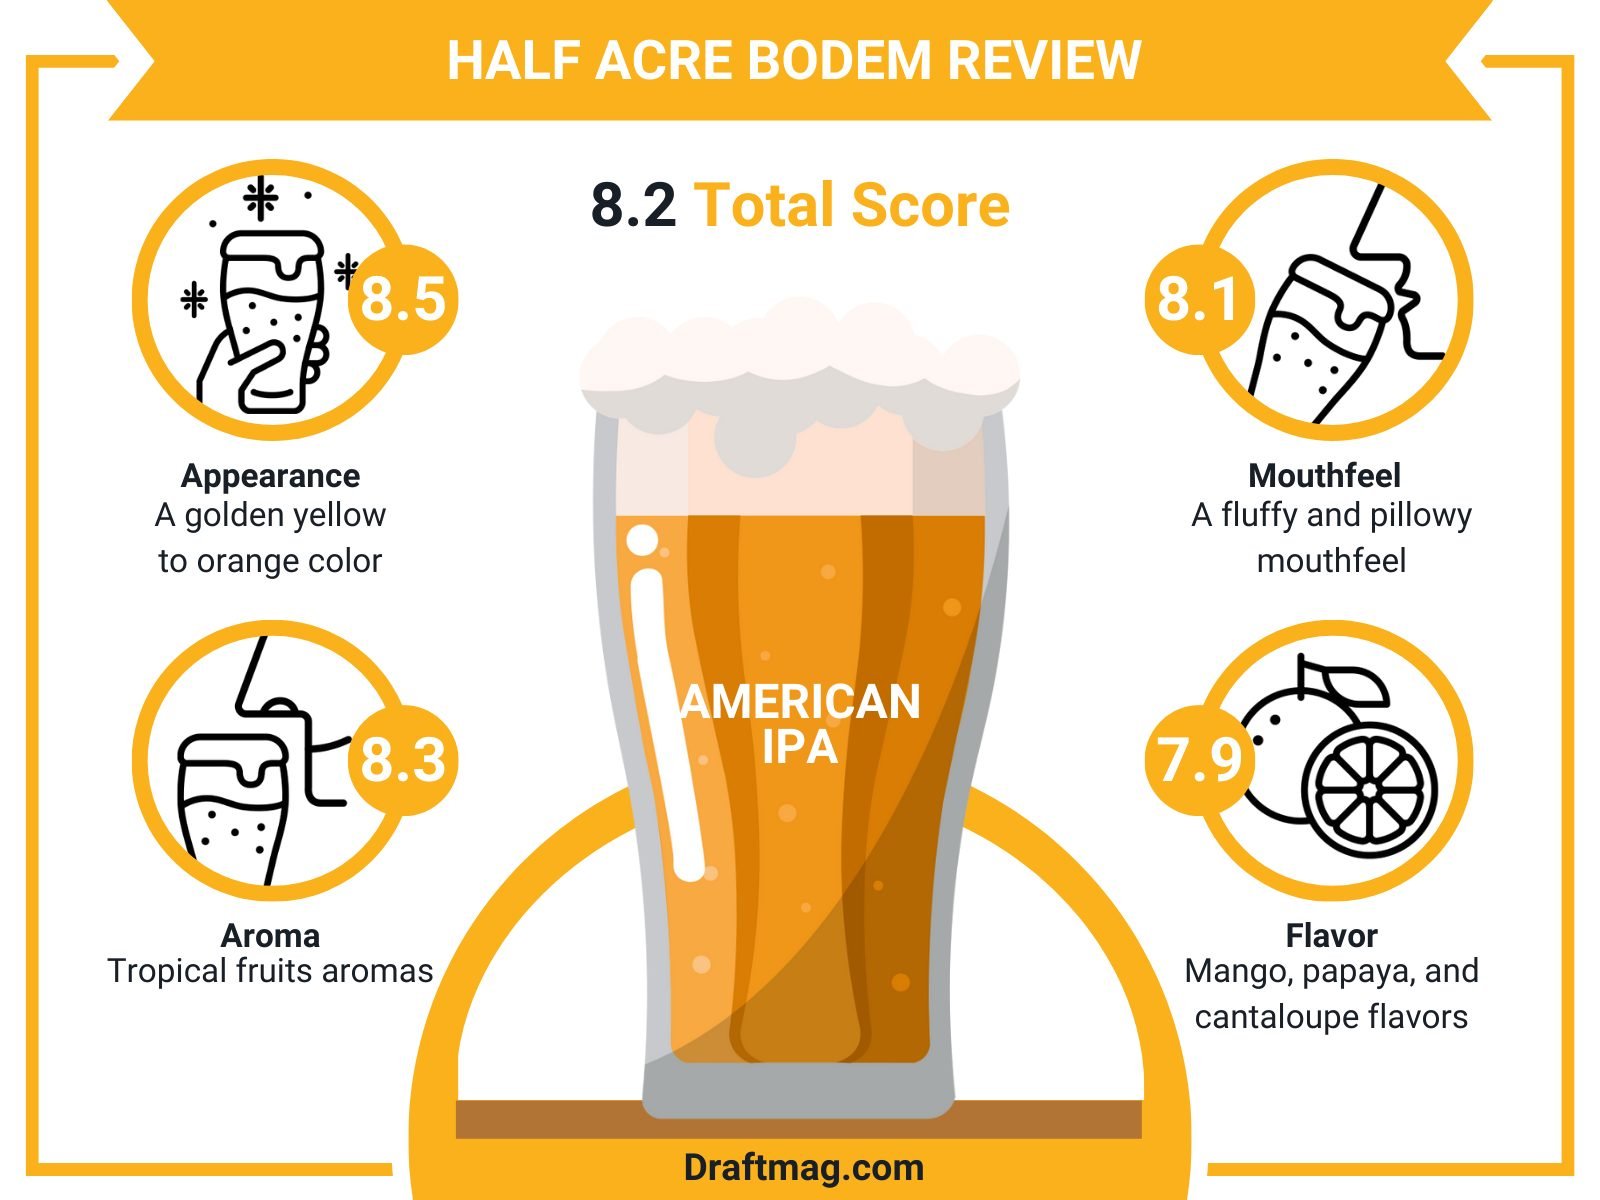 Half Acre Bodem Review Infographic